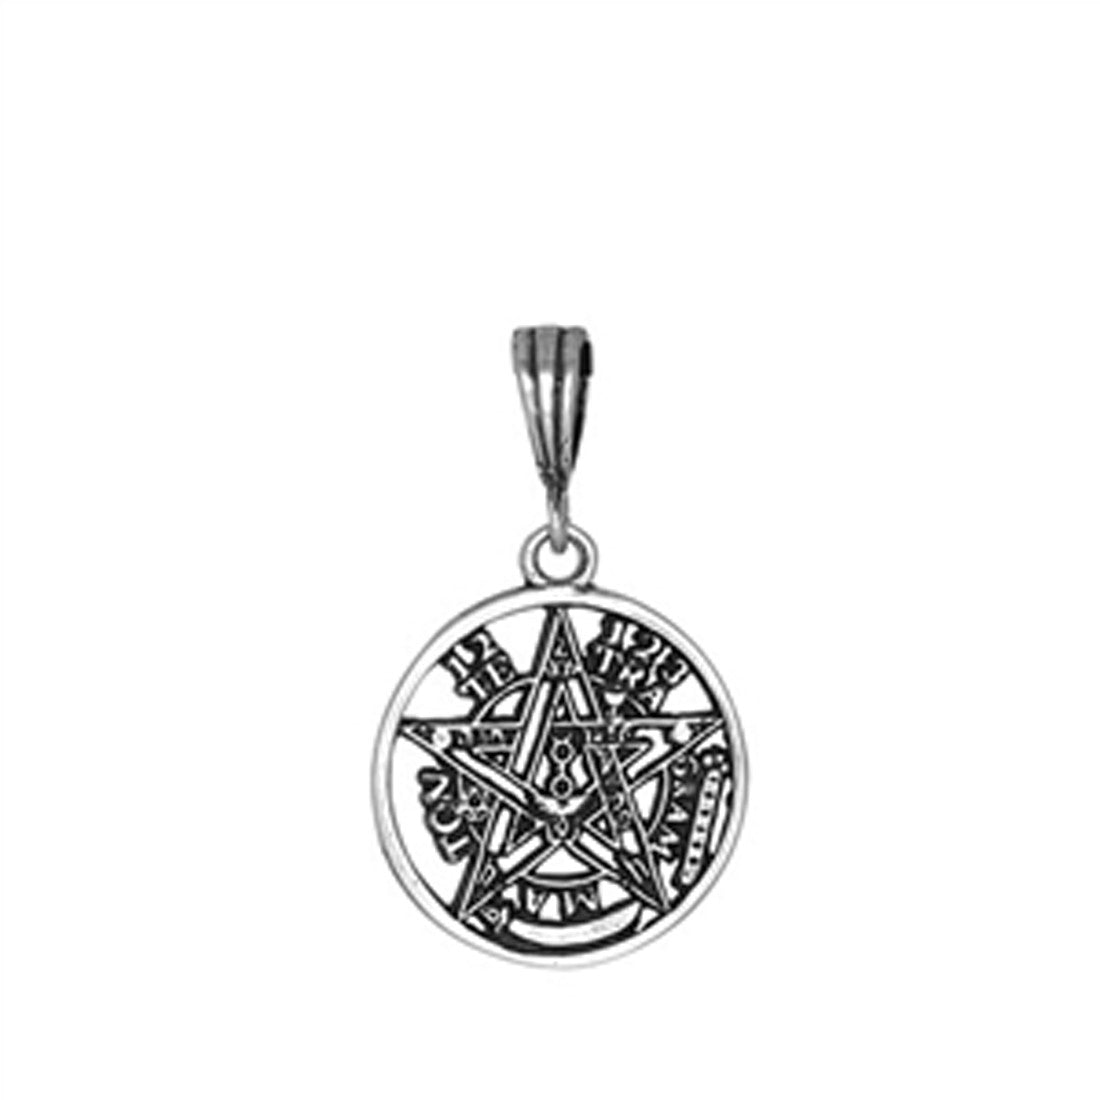 Pentagram Pendant 925 Sterling Silver Oxidize Charm 22mm Long-Blue Apple Jewelary